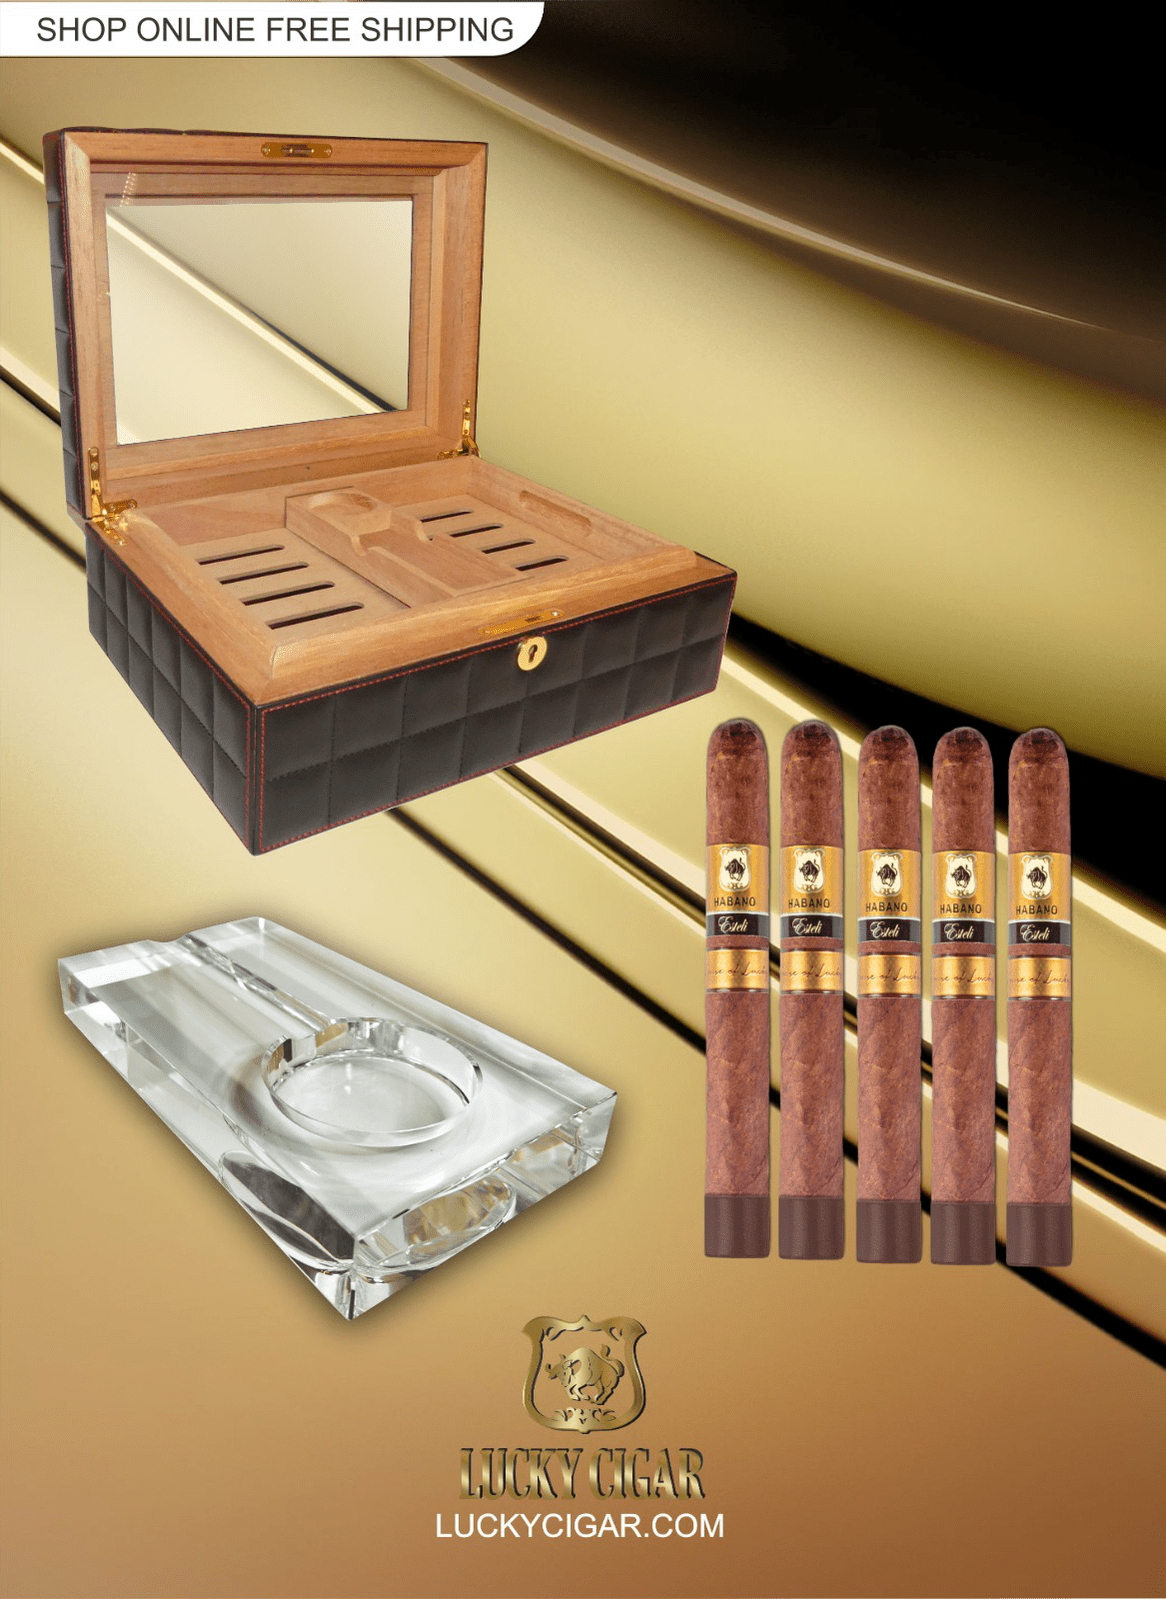 Lucky Ashtrays and Cigar Gift Sets: 5 Habano Esteli Toro, Desk Humidor, Rectangle Glass Ashtray